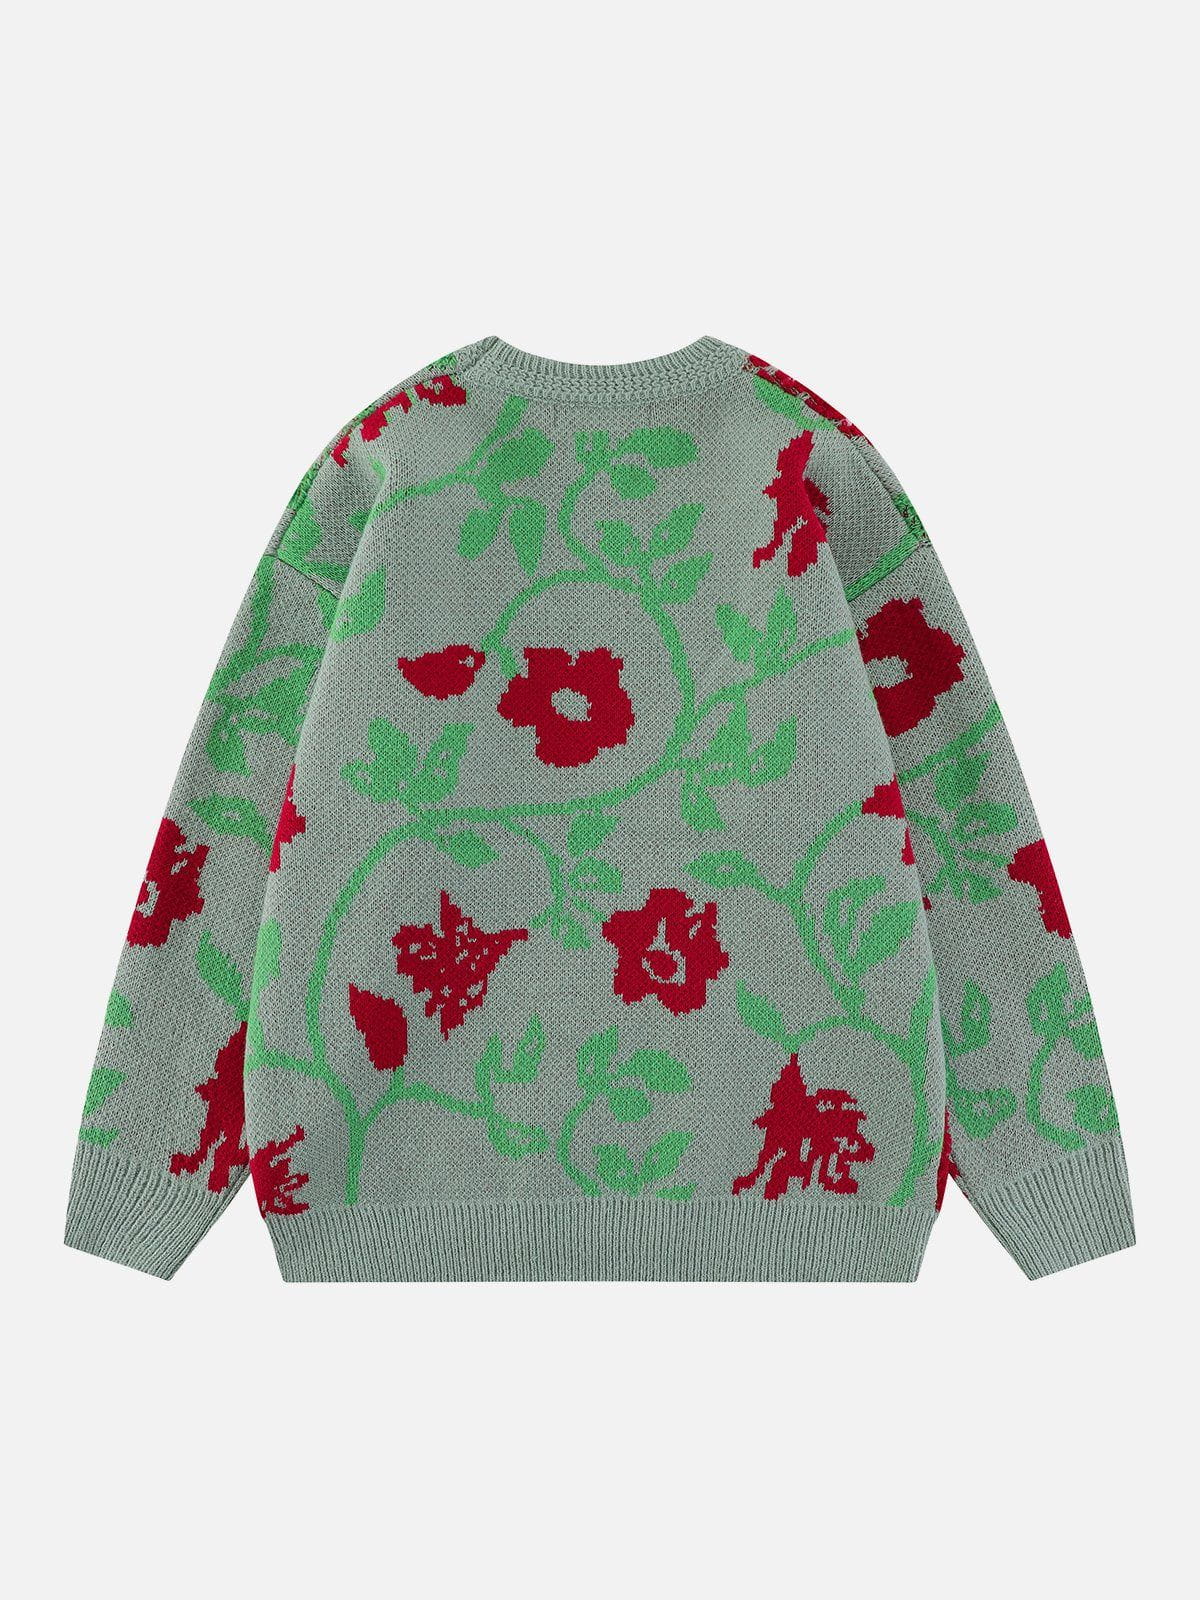 Majesda® - Plush Flower Embroidery Sweater outfit ideas streetwear fashion